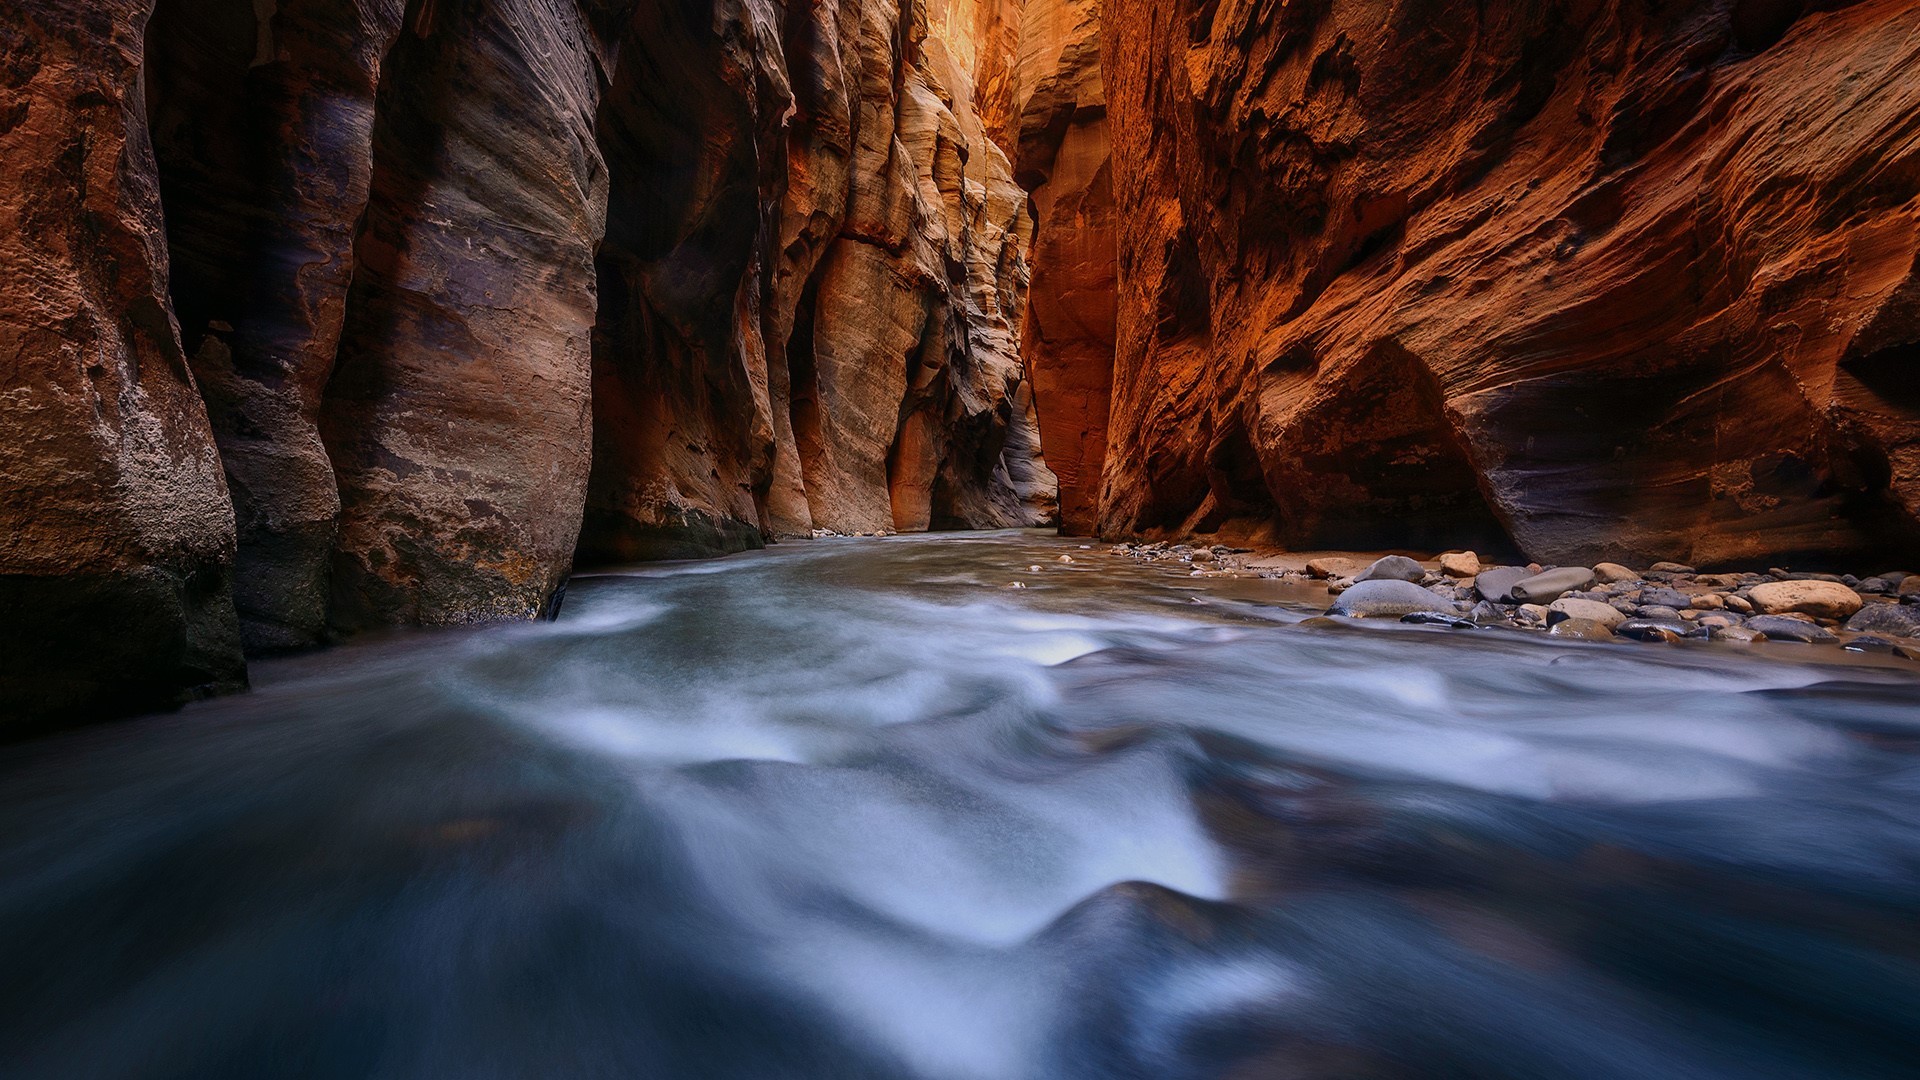 General 1920x1080 nature landscape canyon rocks water spring long exposure Zion National Park Utah USA